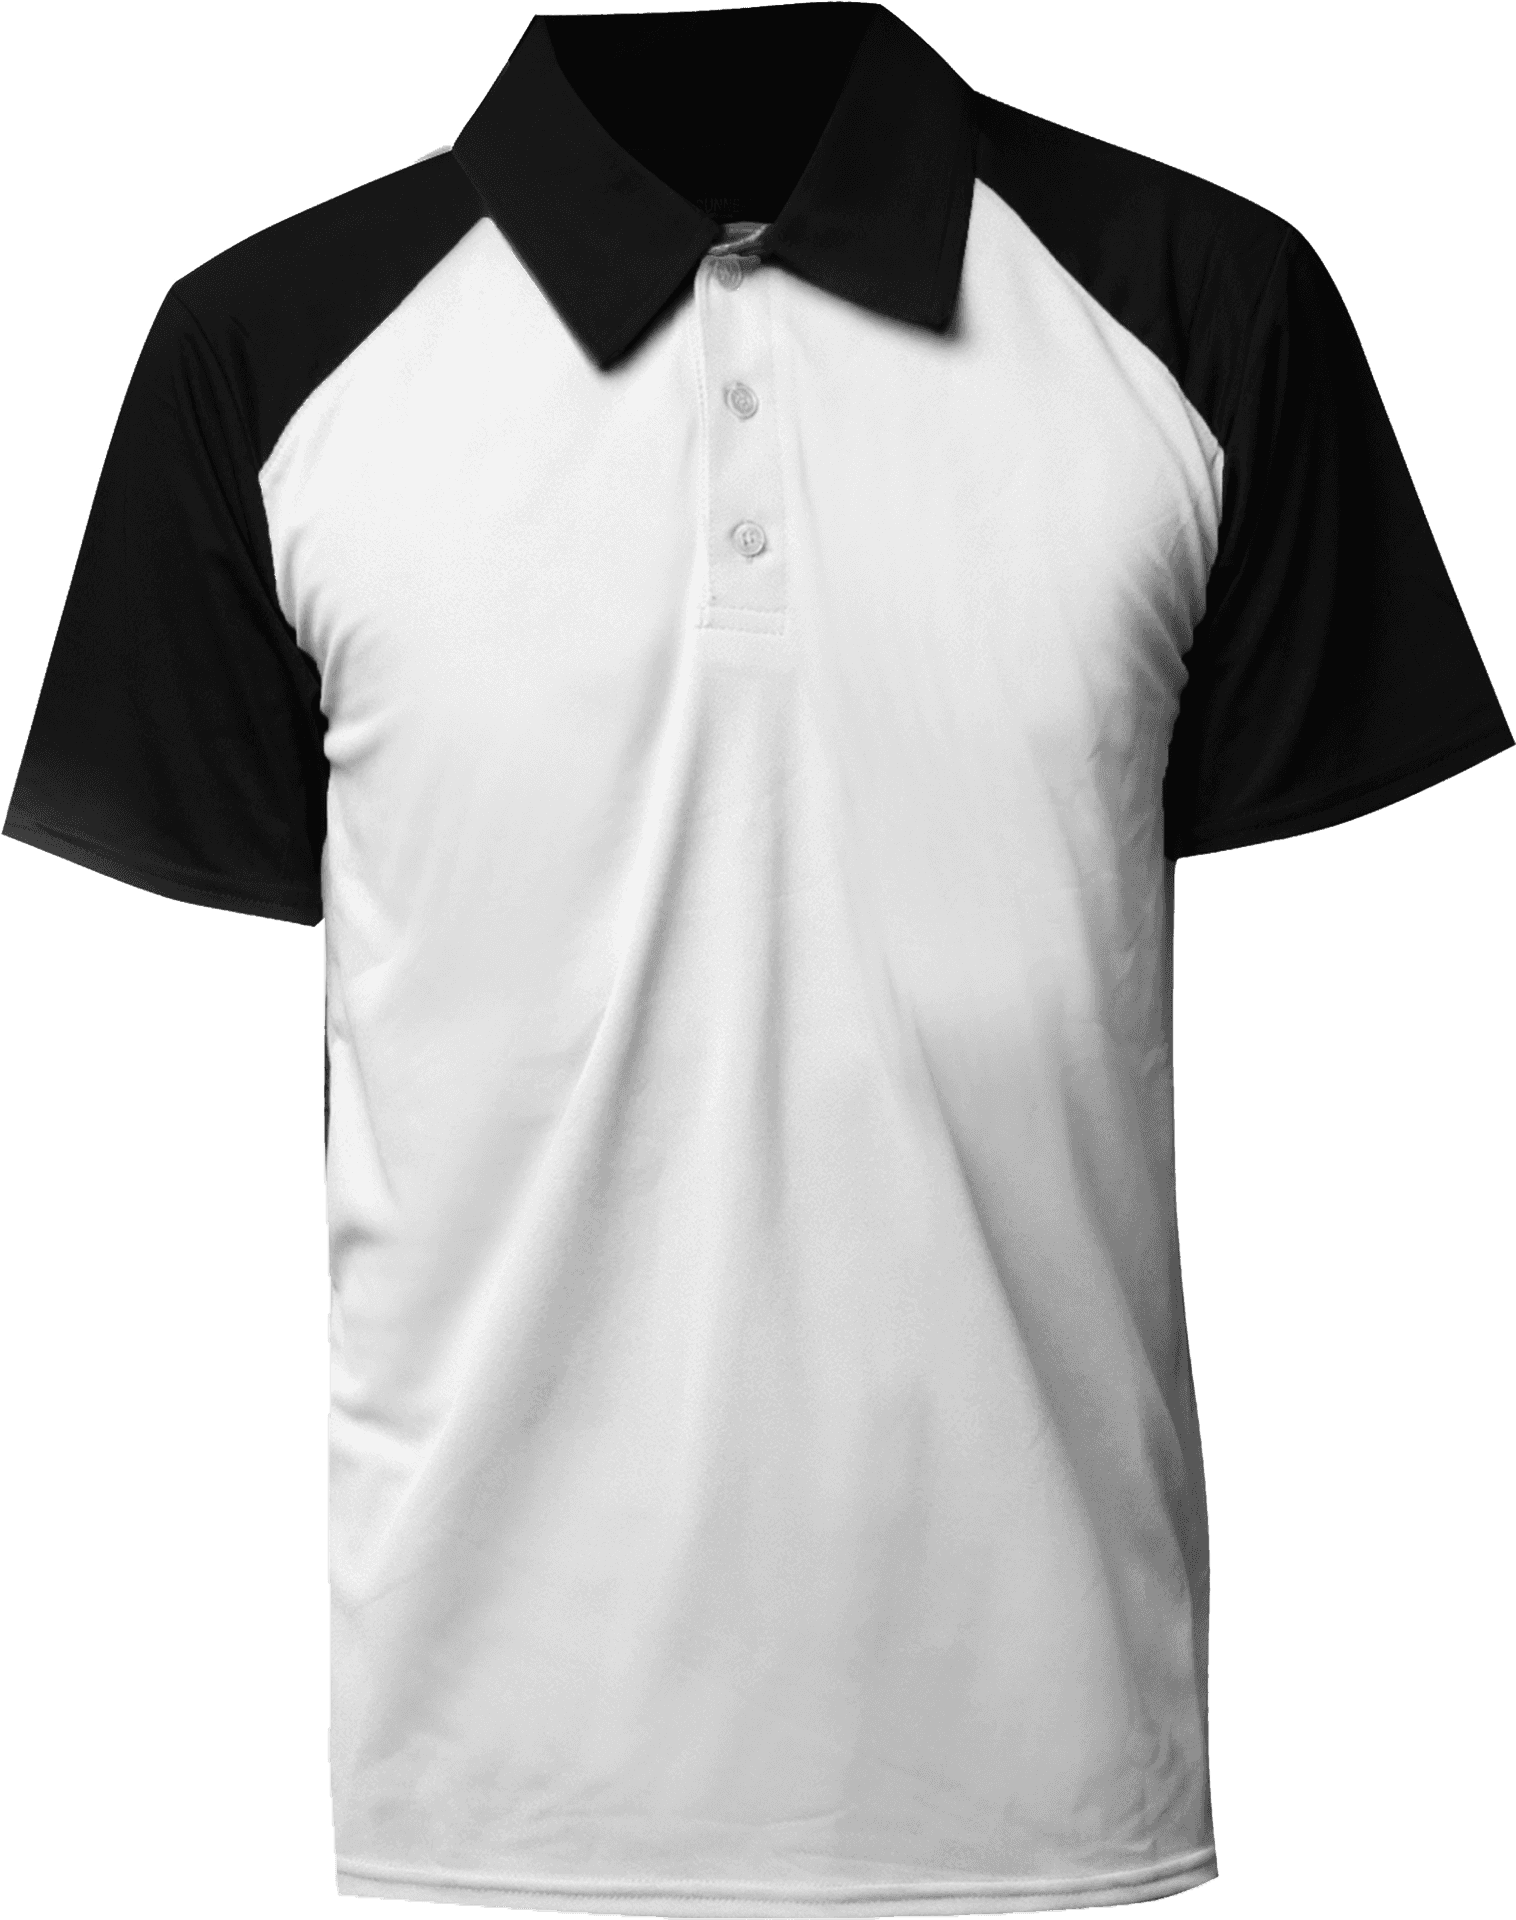 Black White Polo Shirt Design PNG